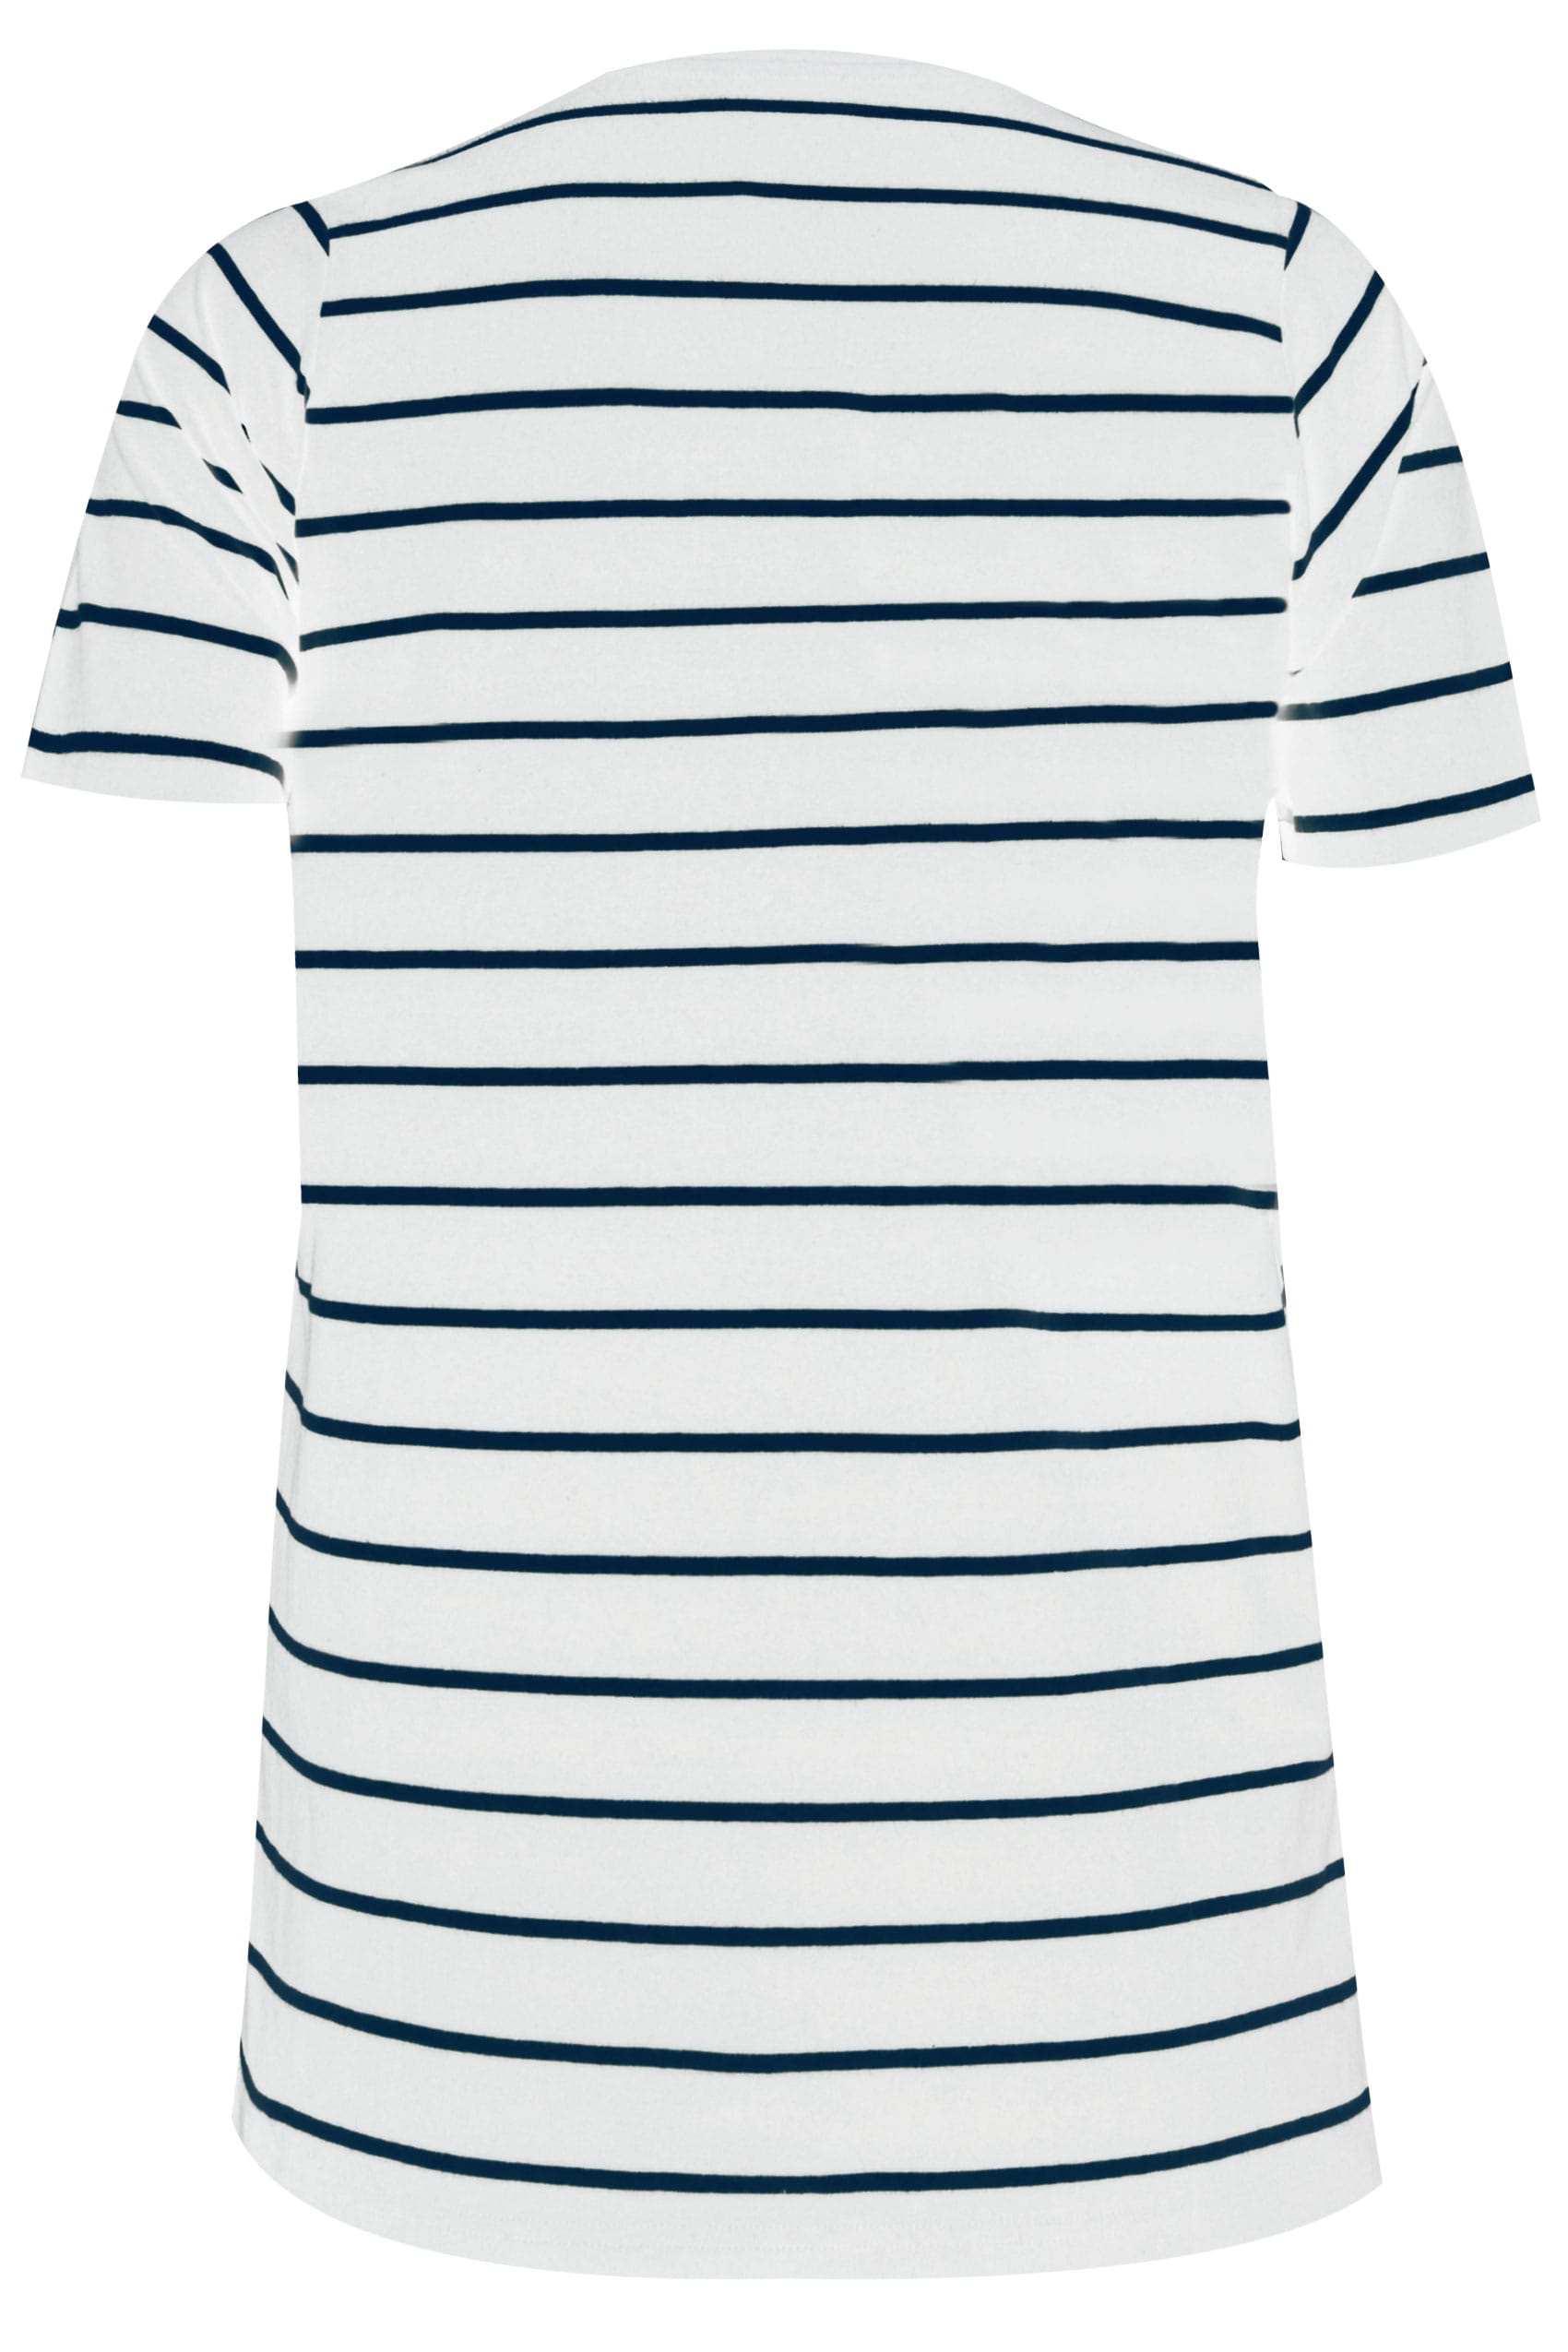 2 PACK Navy & White Stripe & Plain T-Shirt, Plus size 16 to 36